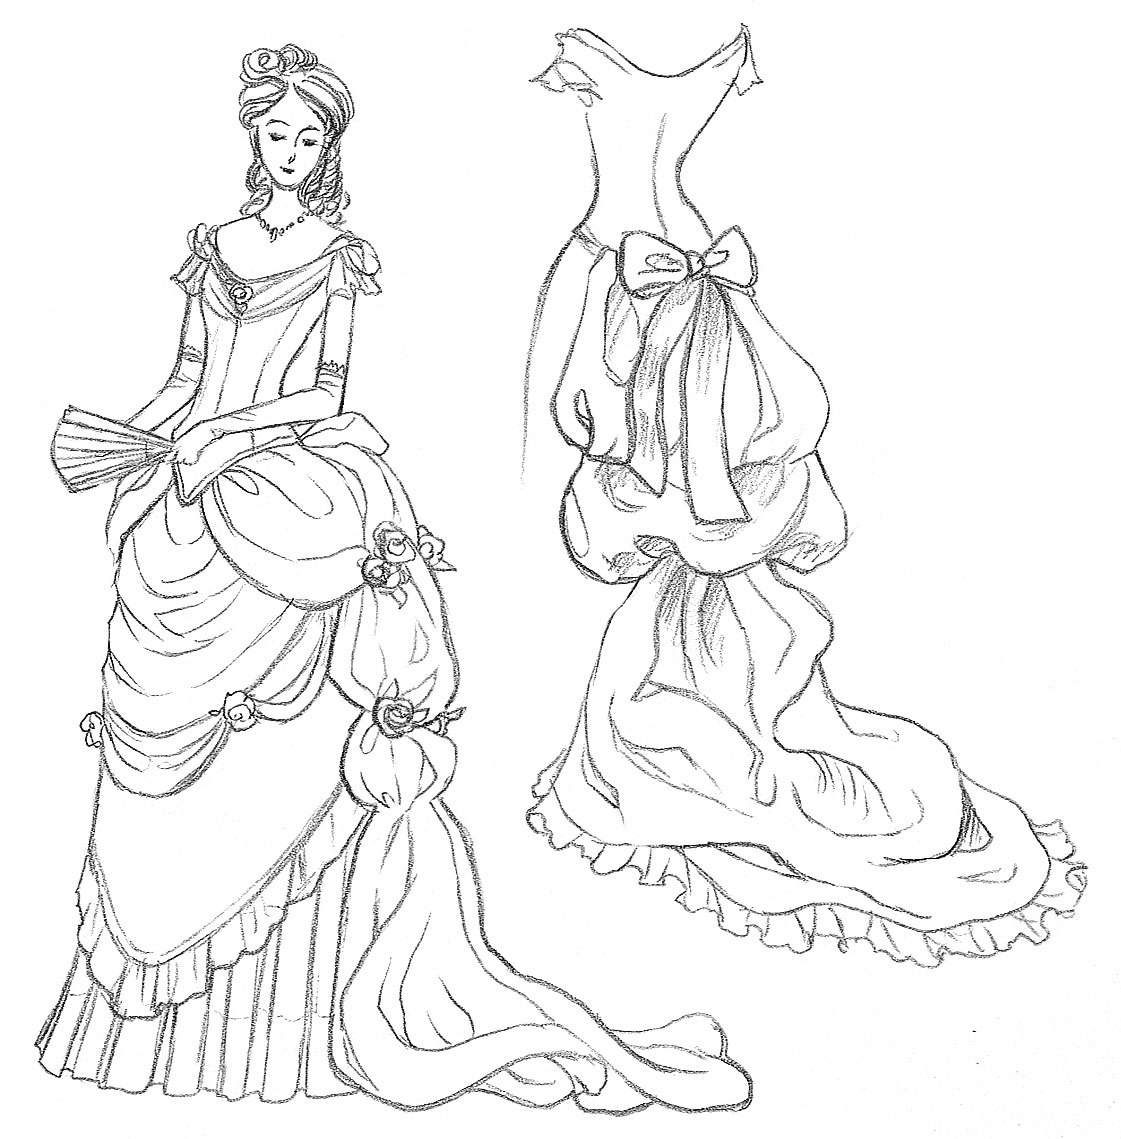 Костюм на бал рисунок. Наряд на бал. Раскраска бал. Платье на бал рисунок. Бальные платья 19 века.